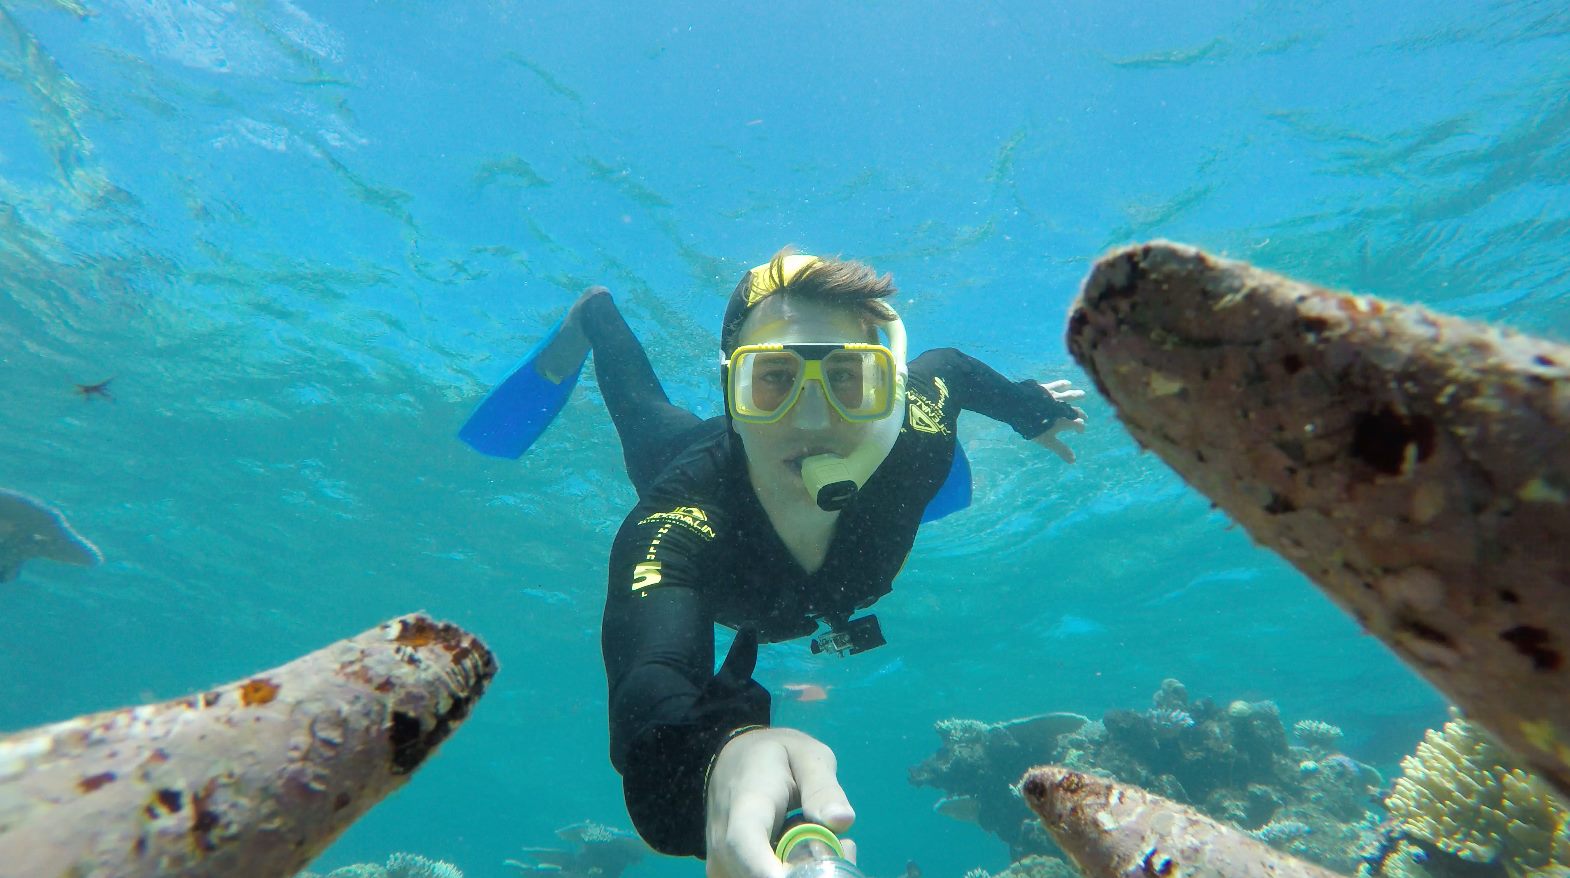 Snorkelling in the Great Barrier Reef by Michael Kaplan